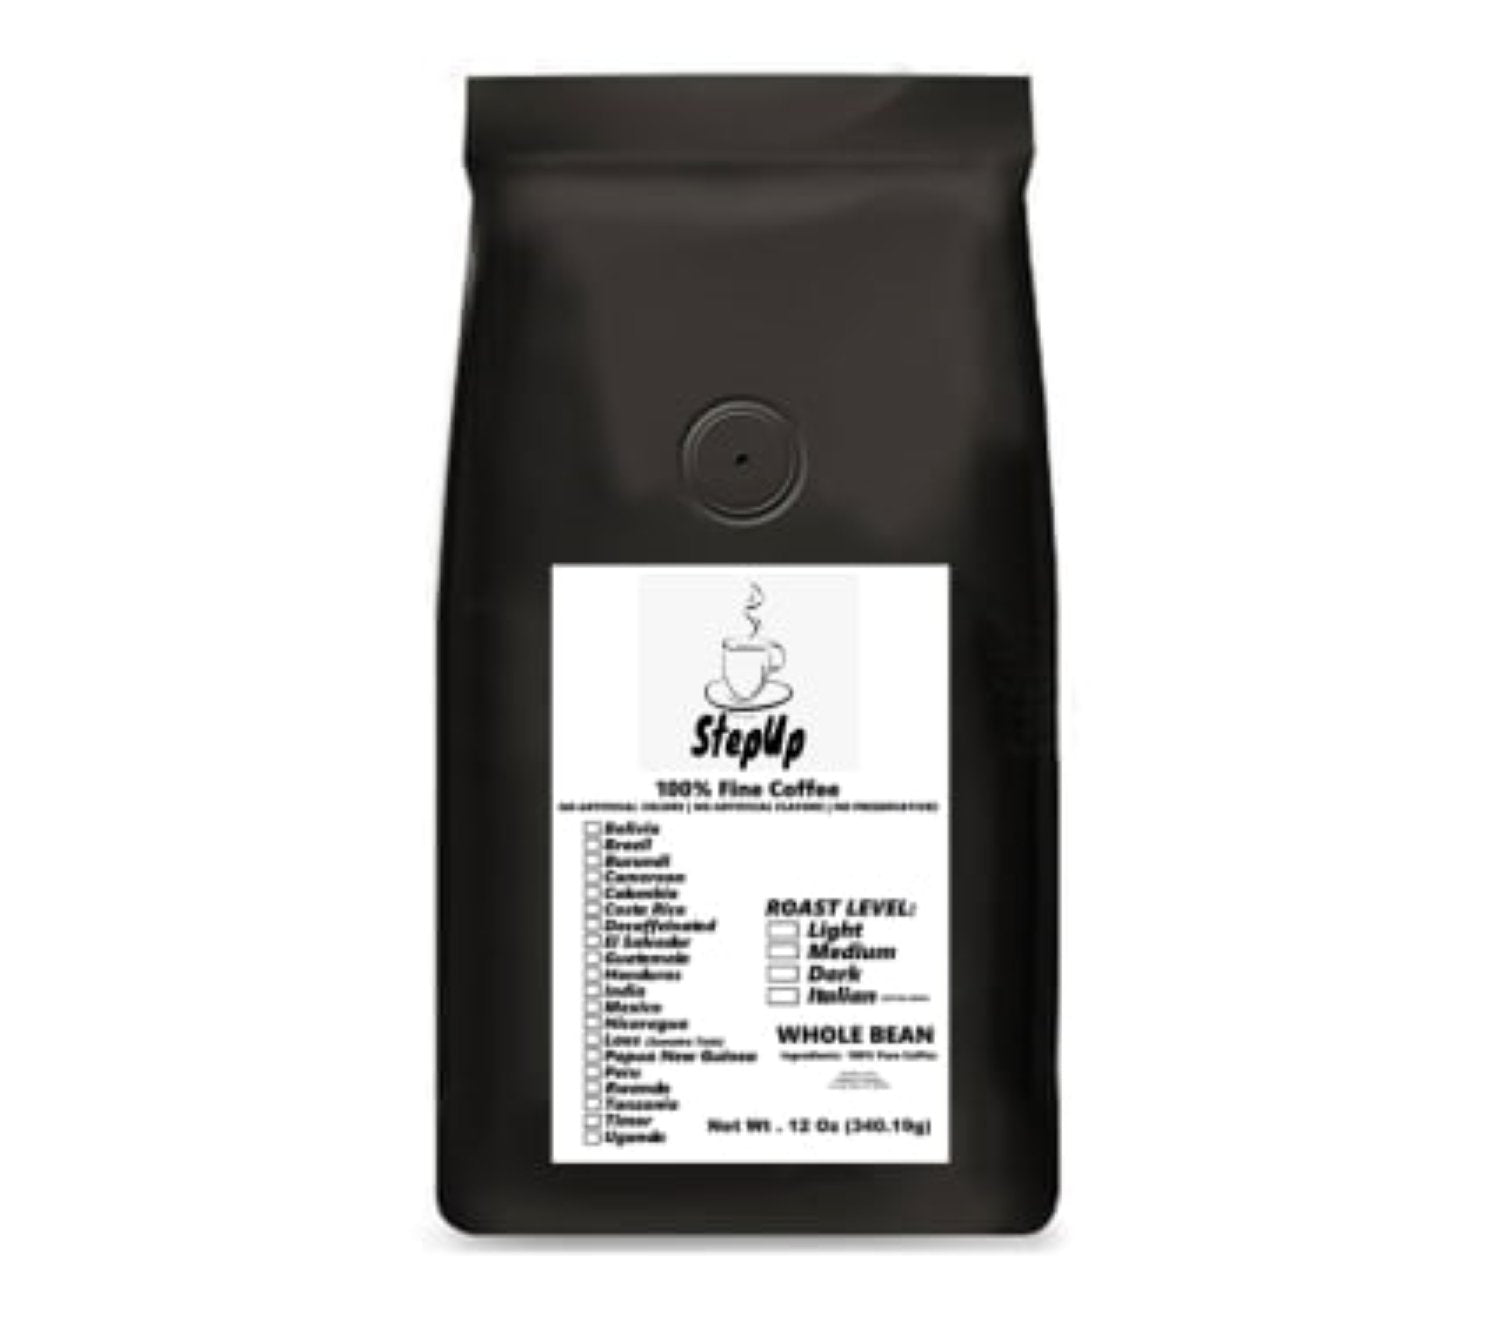 Papua New Guinea Whole Bean, Espresso, Standard 12oz-12 lb. - StepUp Coffee